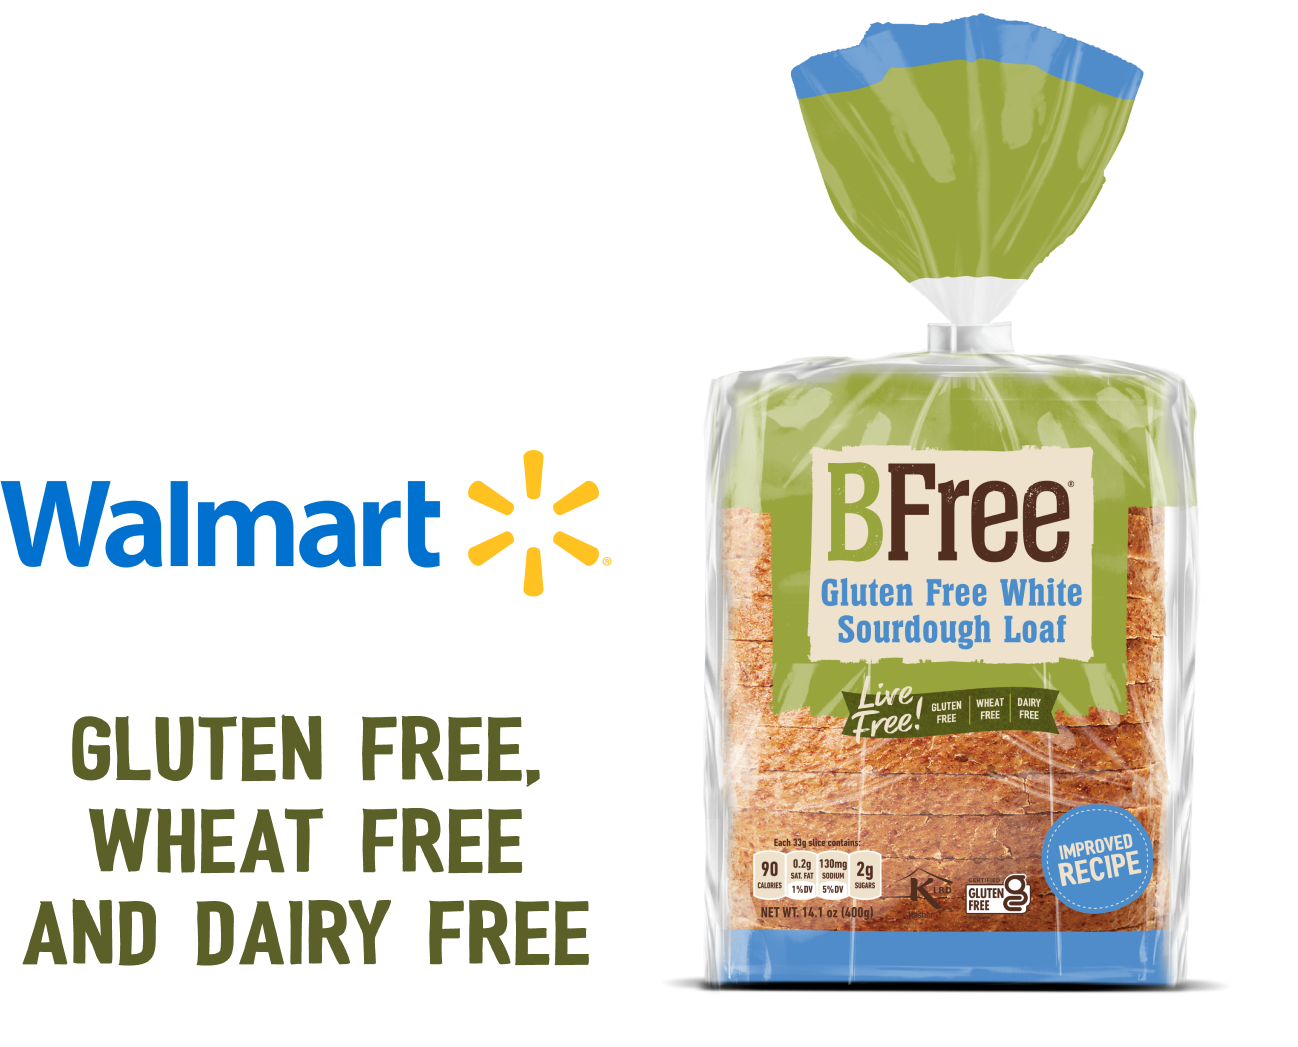 FREE Loaf of Bree Gluten Free White Sourdough Bread at Walmart